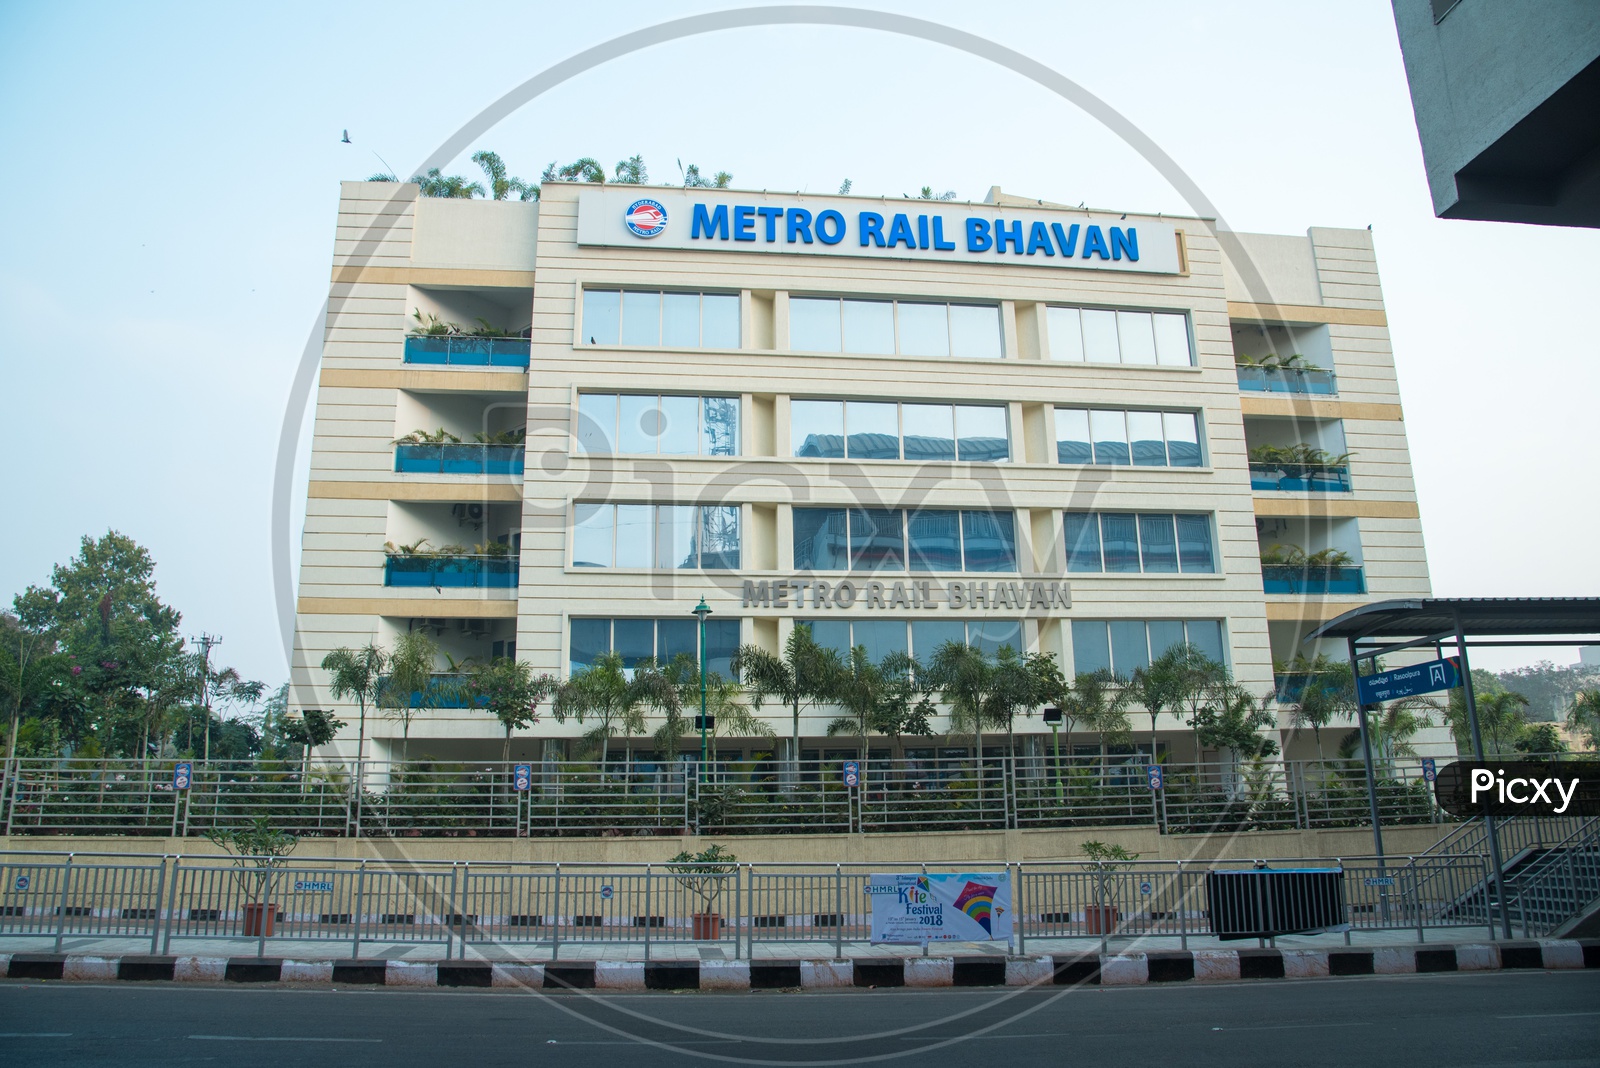 Metro Rail Bhavan